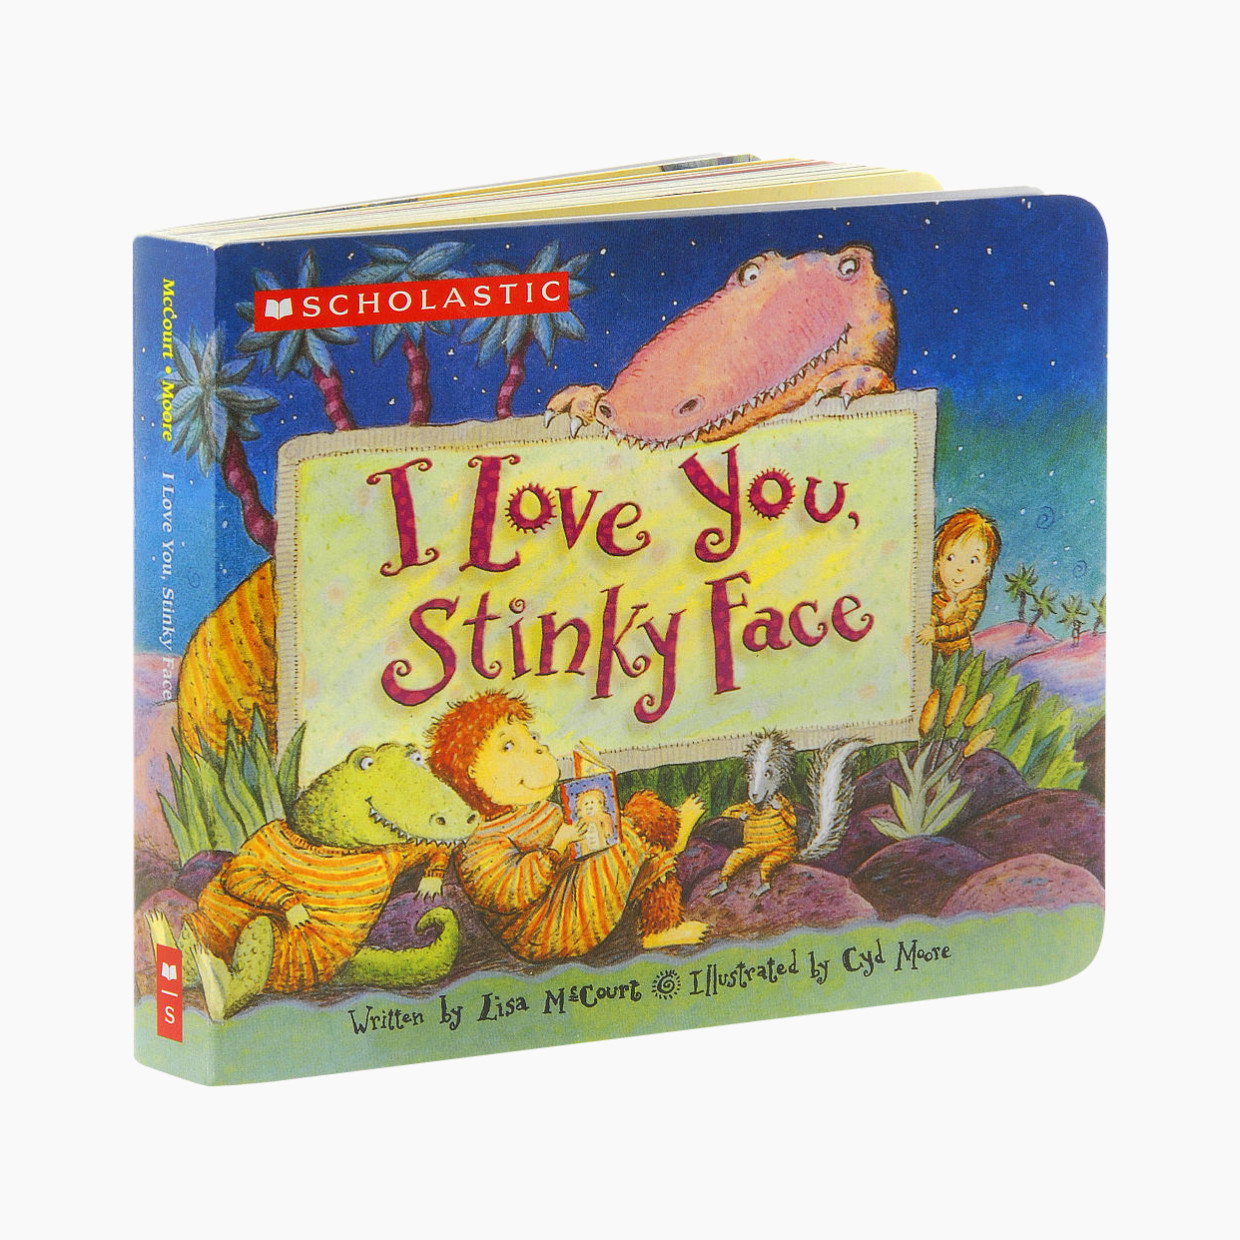 I Love You, Stinky Face.